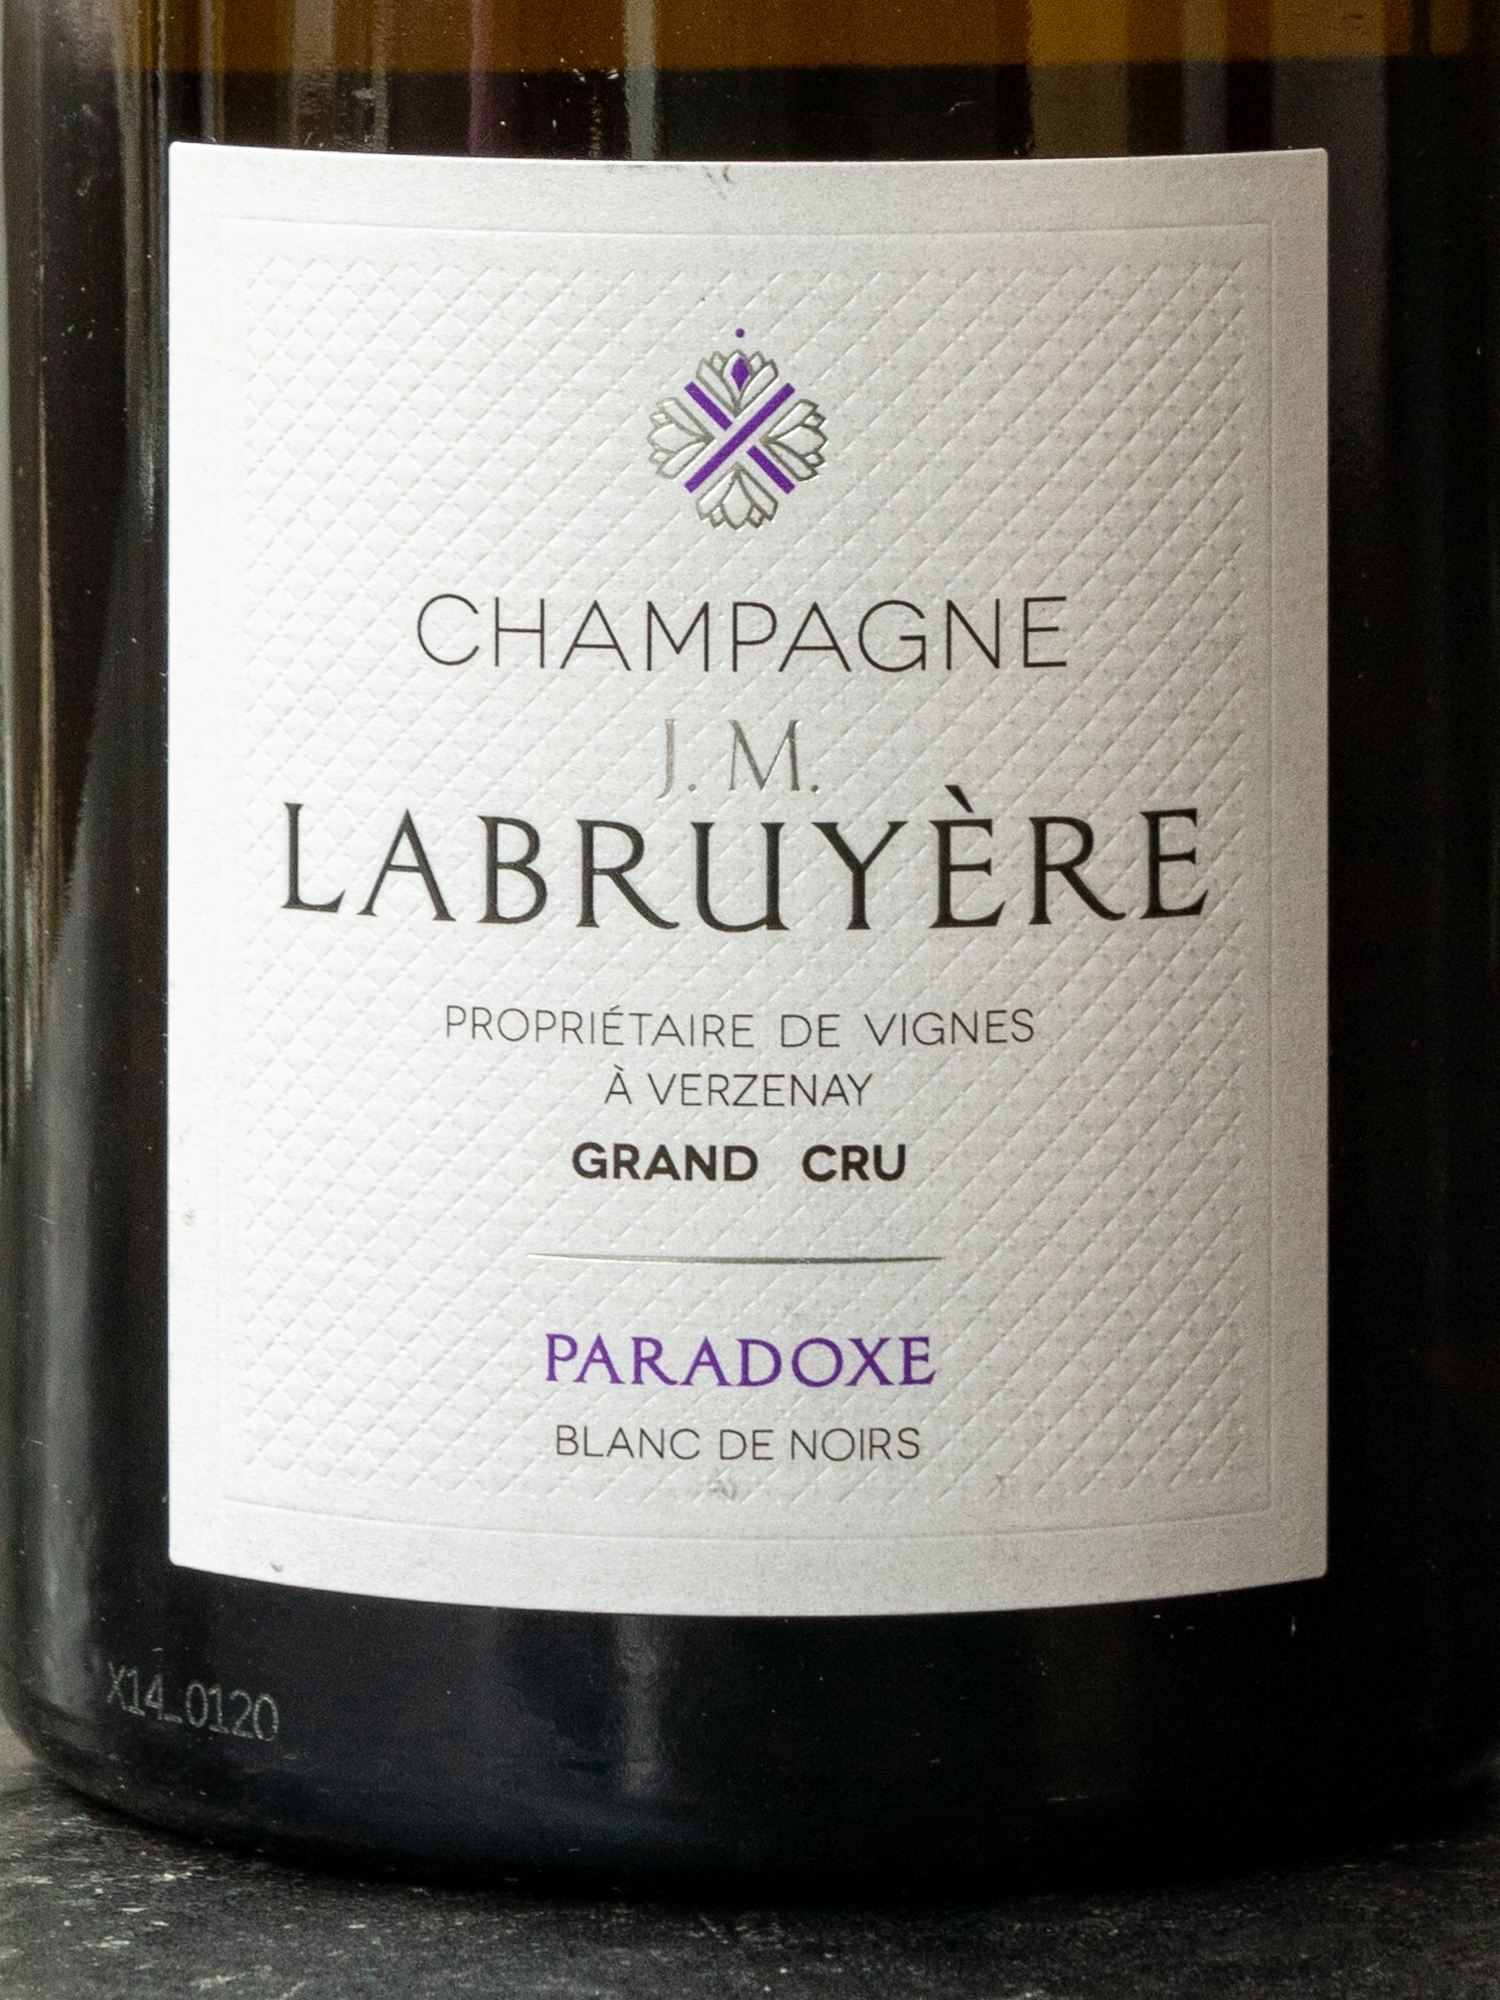 Шампанское J.M. Labruyere Champagne Grand Cru Paradoxe Blanc de Noirs / Гран Крю Экстра Брют Блан де Нуар Парадокс Лабрюйер